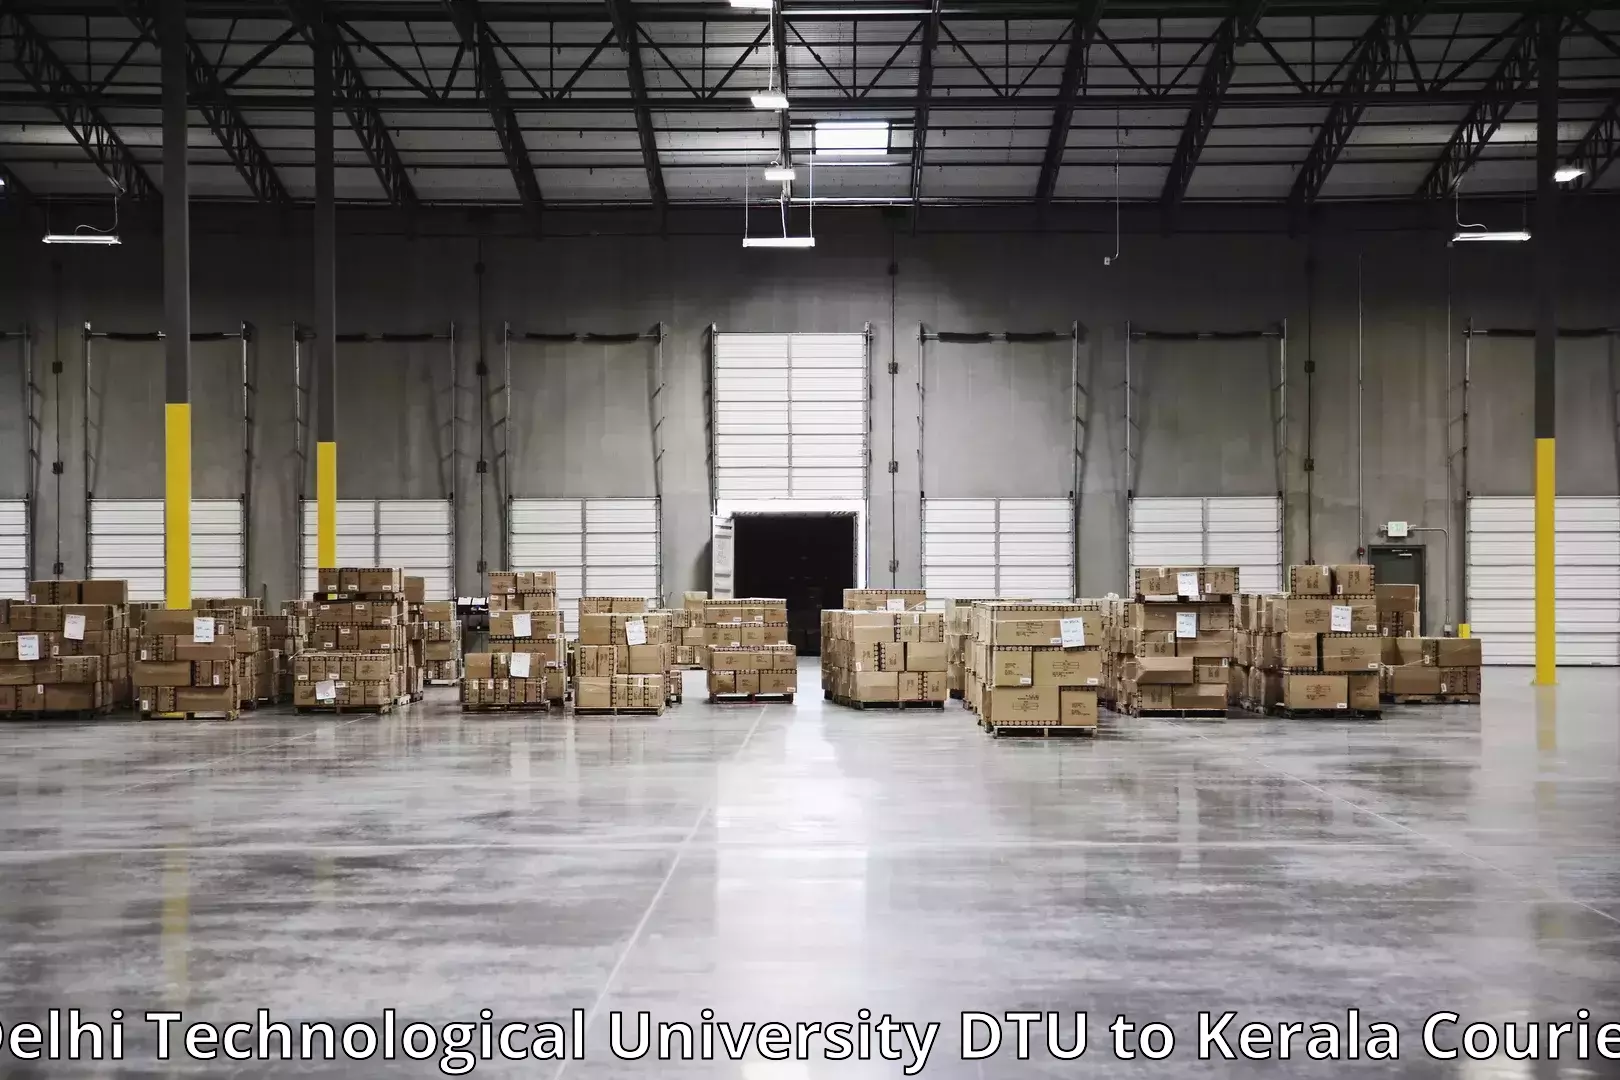 Furniture transport experts Delhi Technological University DTU to Kerala University Thiruvananthapuram